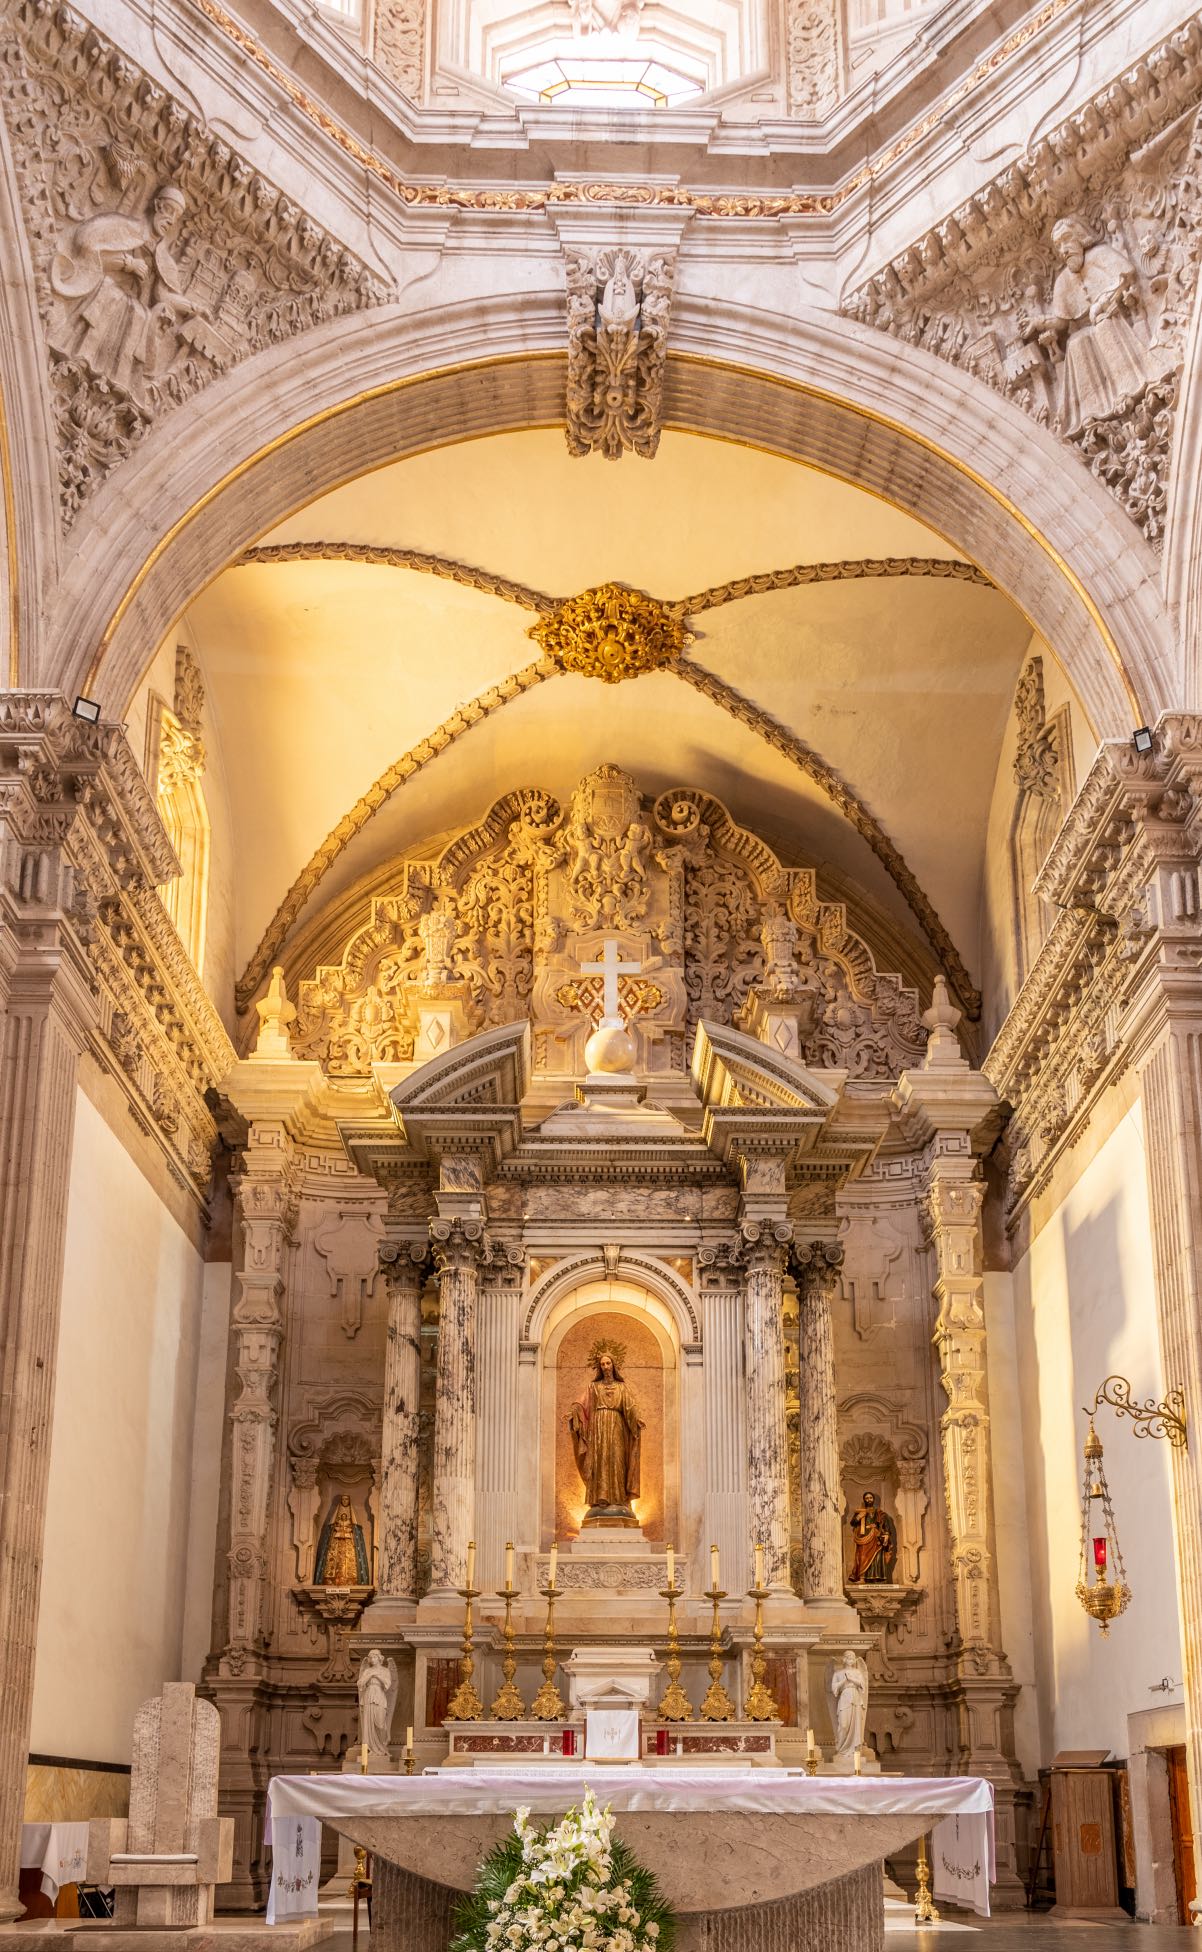 Historia de la Catedral de Chihuahua